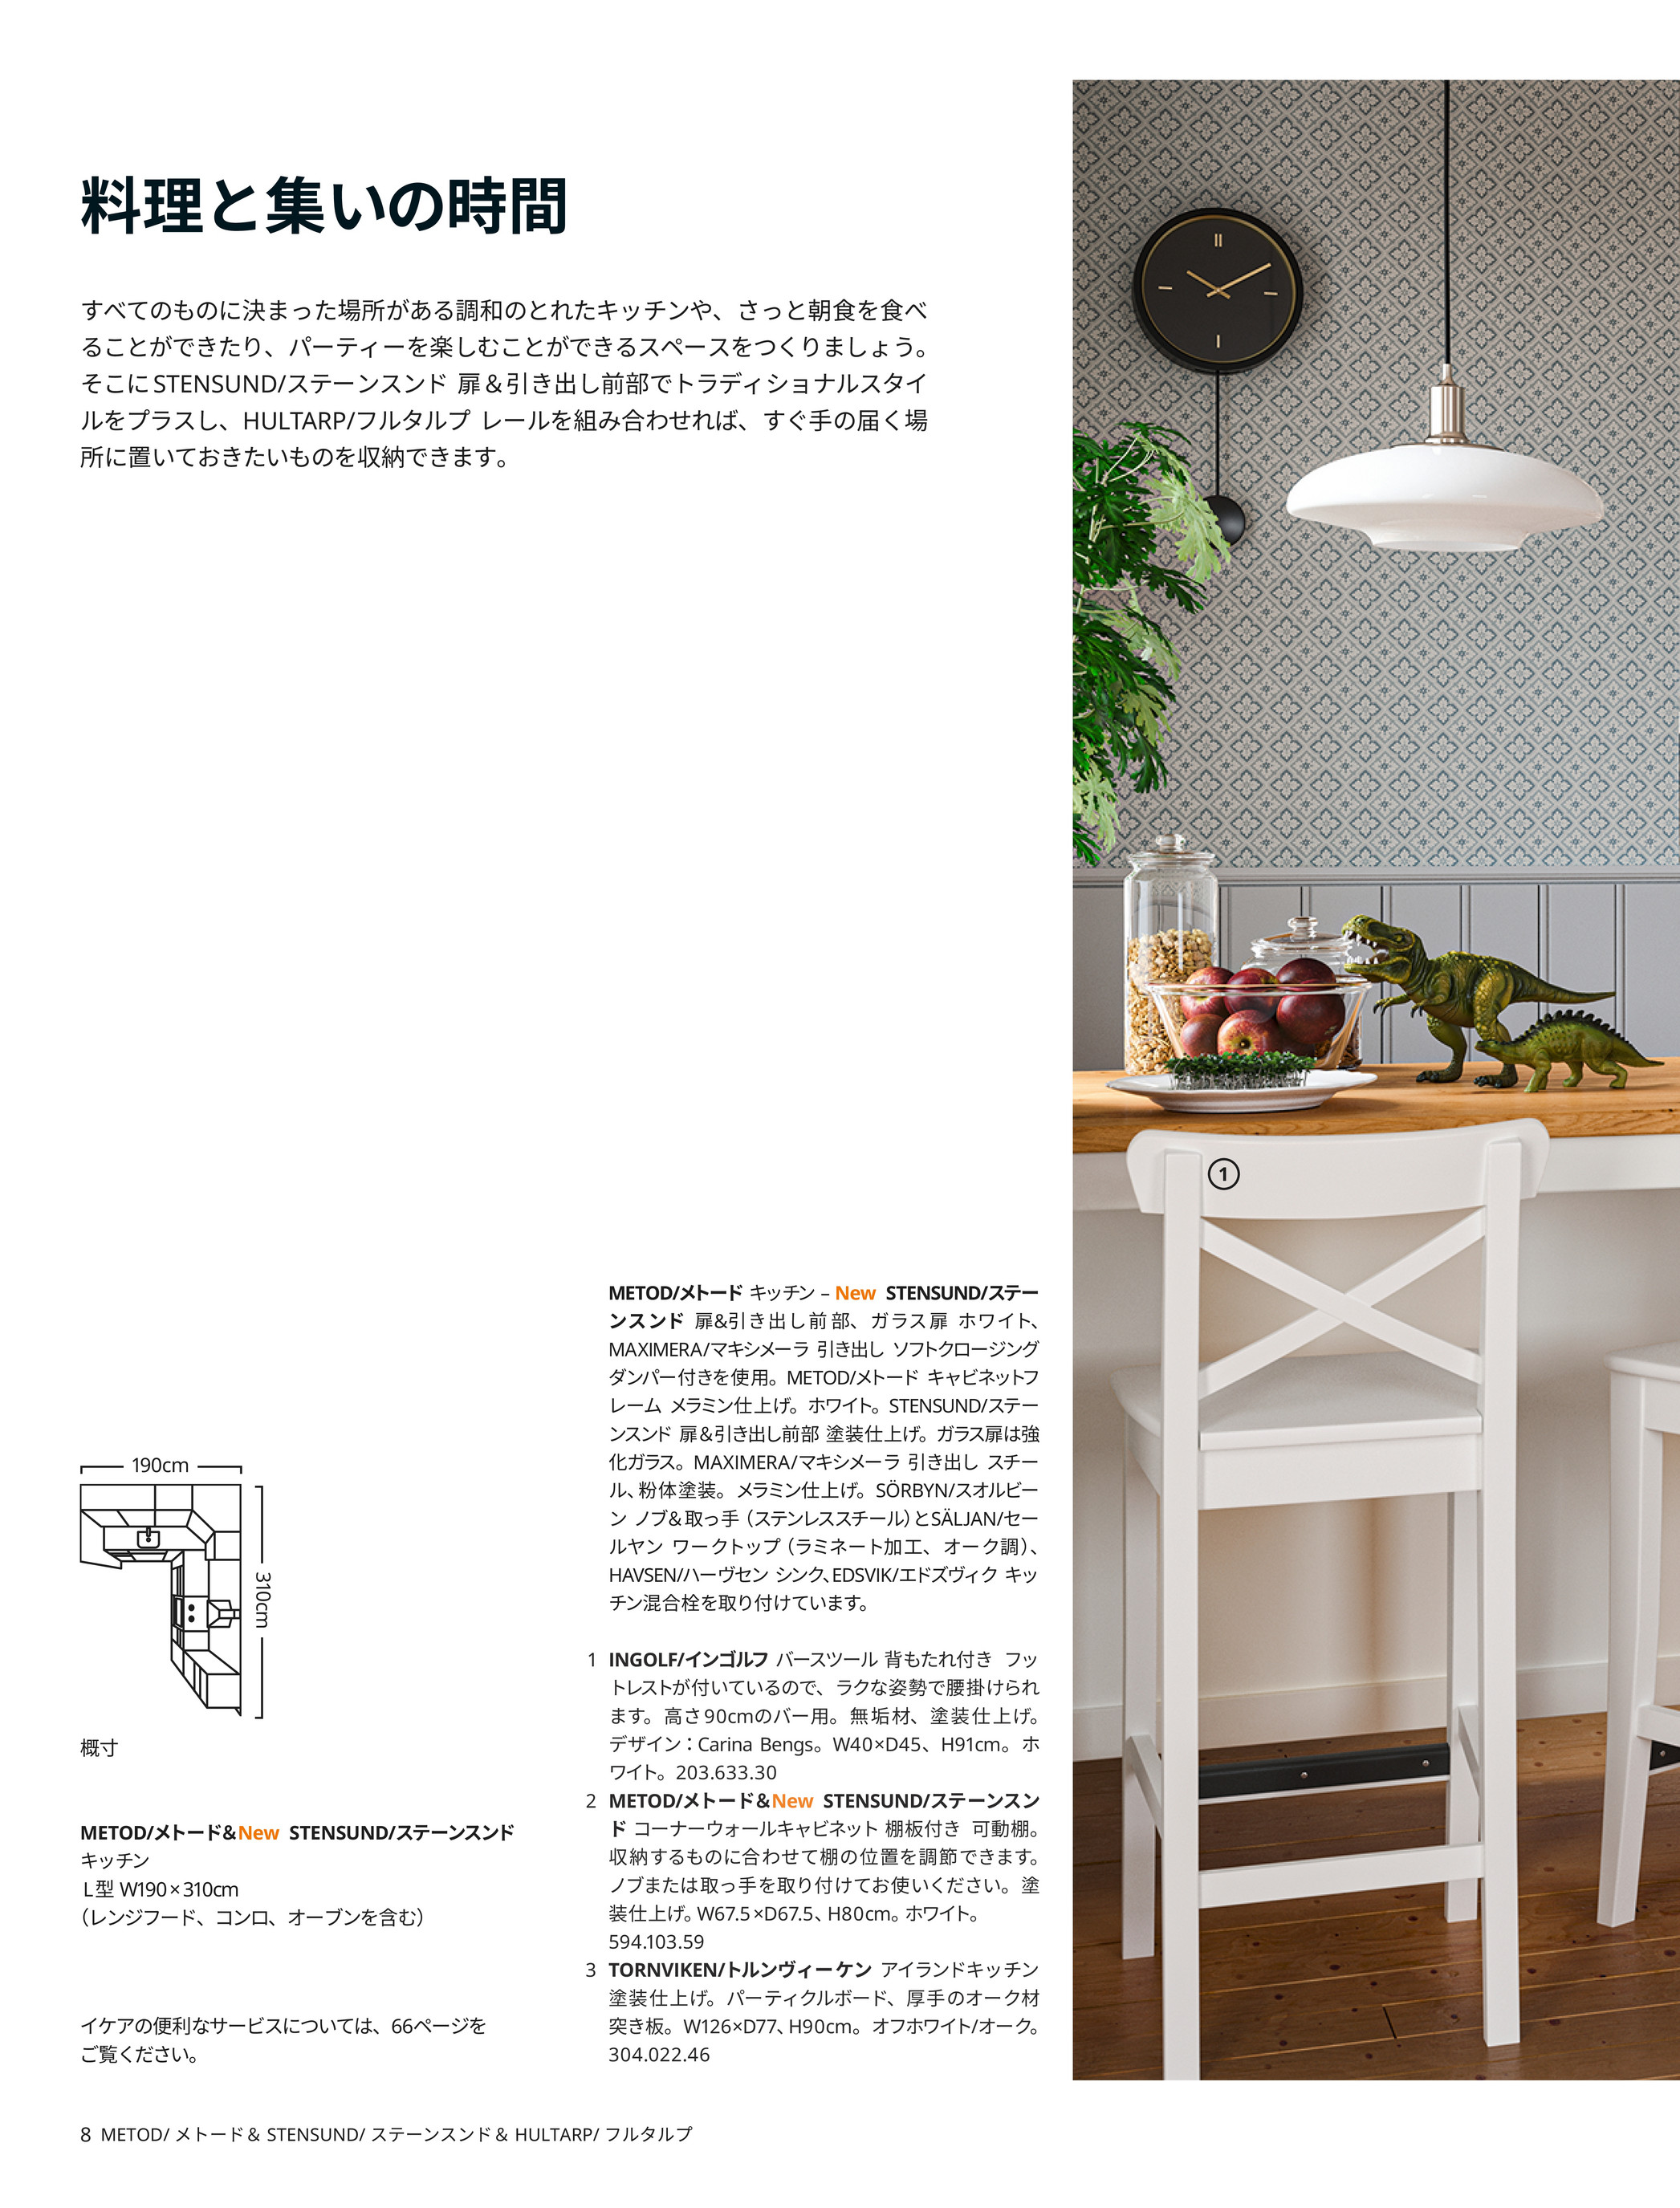 IKEA Japan (Japanese) - IKEA キッチン ハンドブック 2022 - ページ 6-7